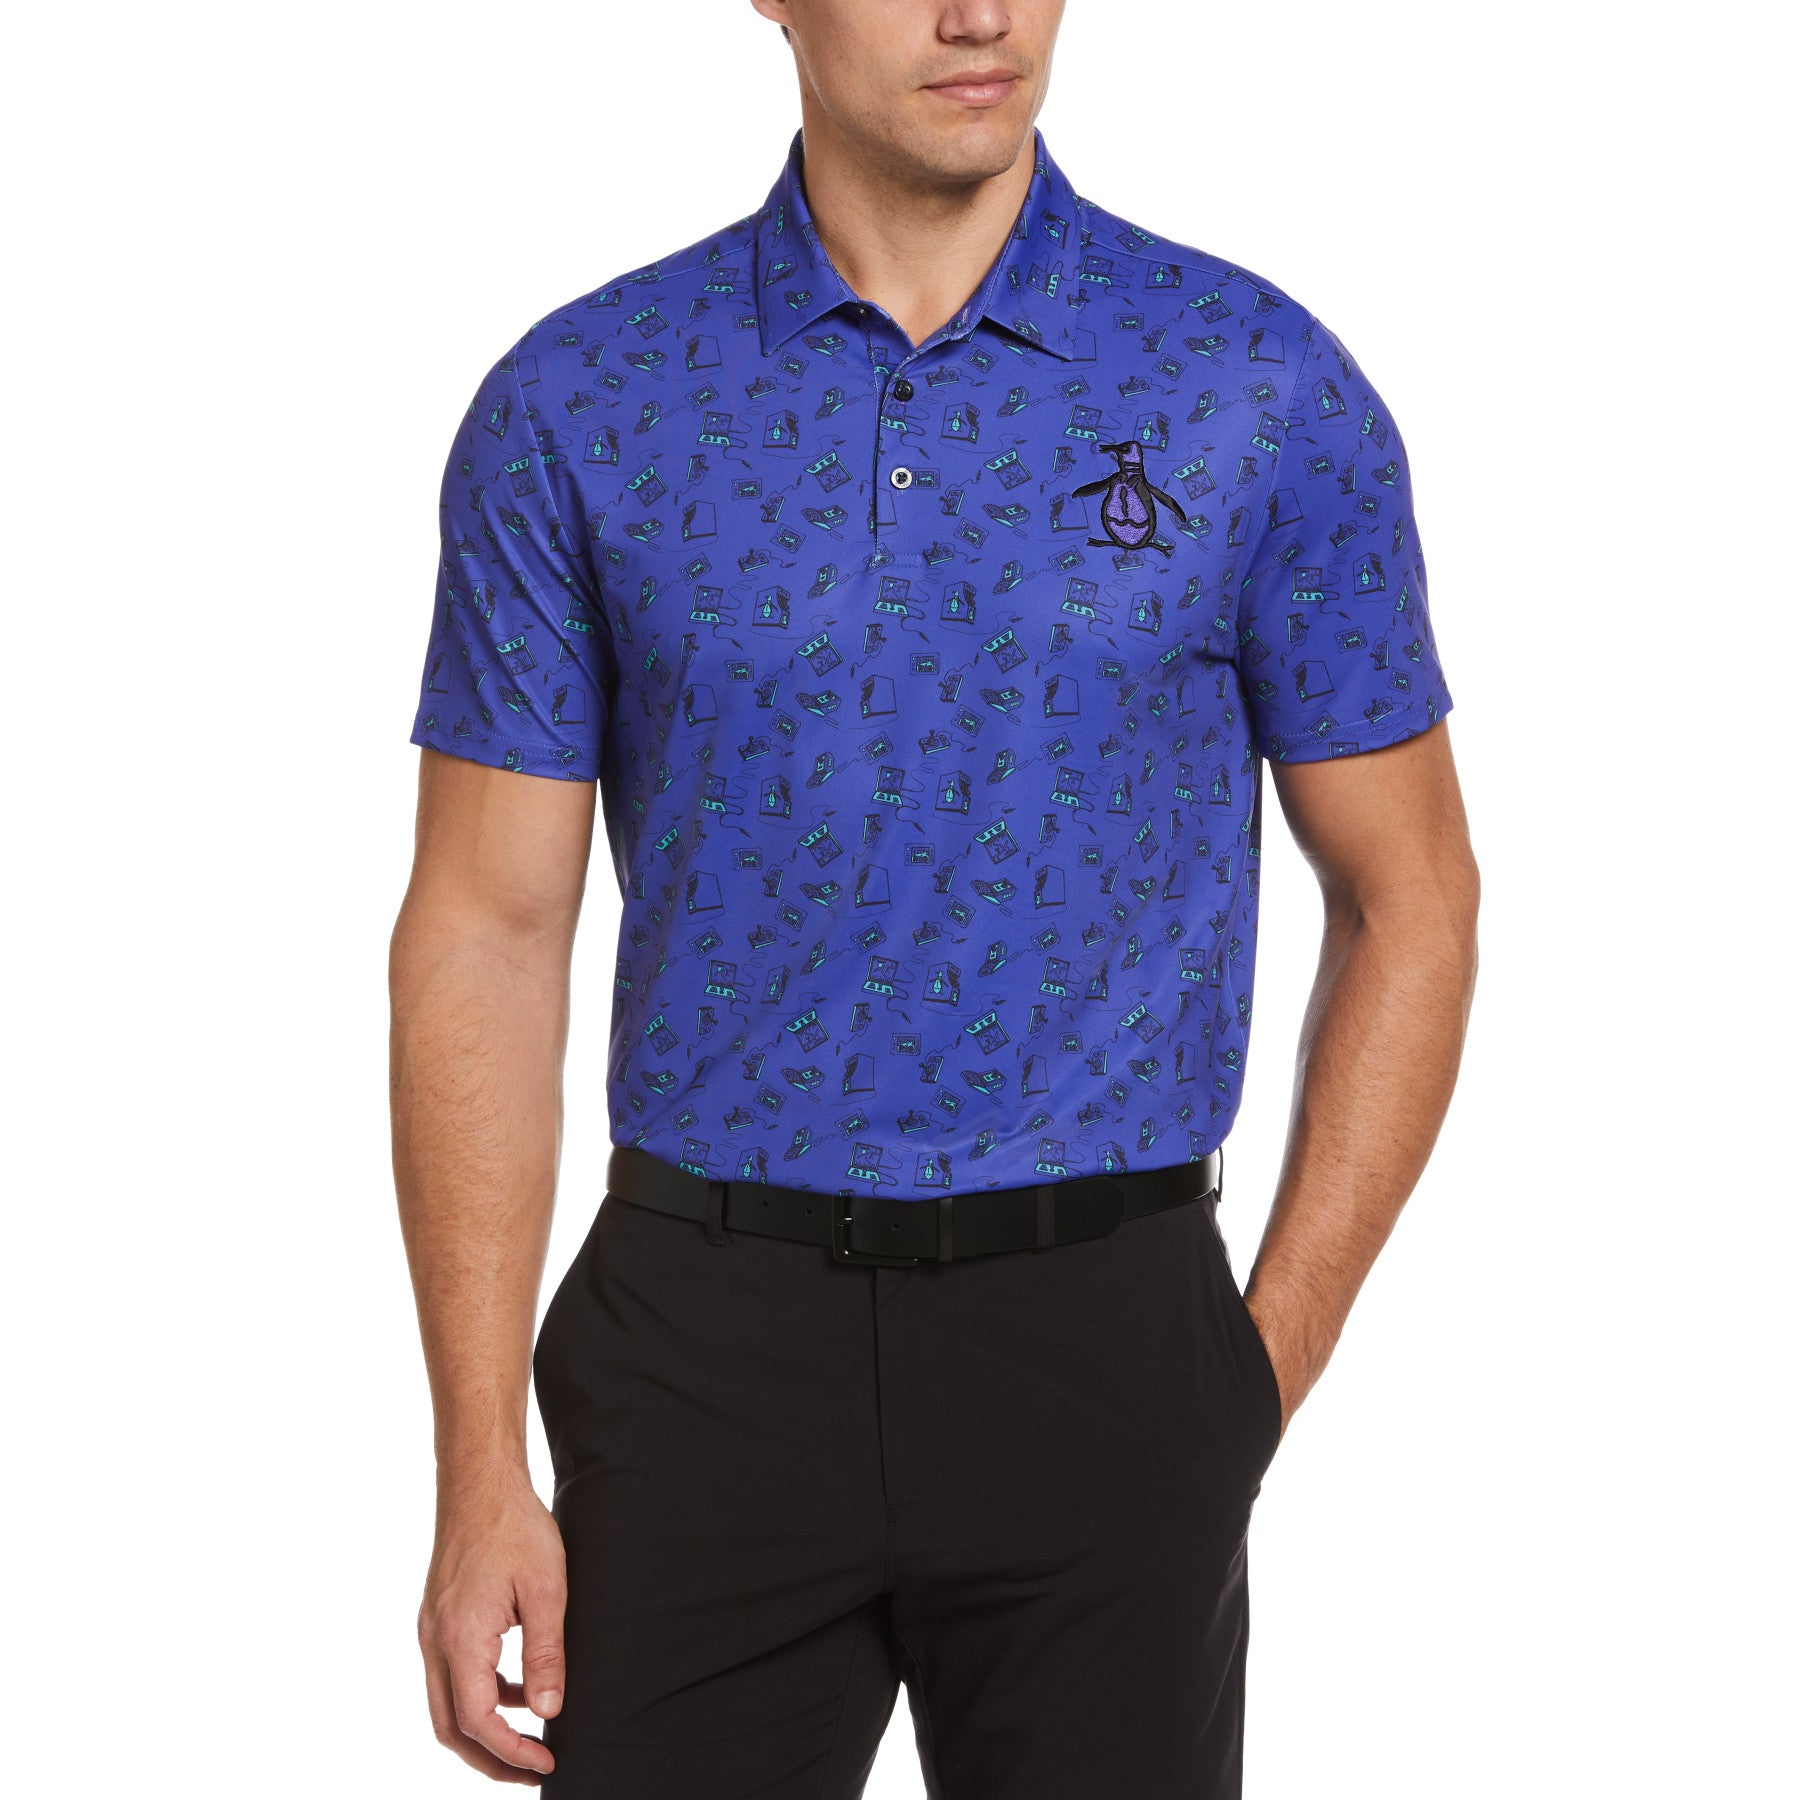 View Retro Arcade Print Golf Polo Shirt In Bluing information